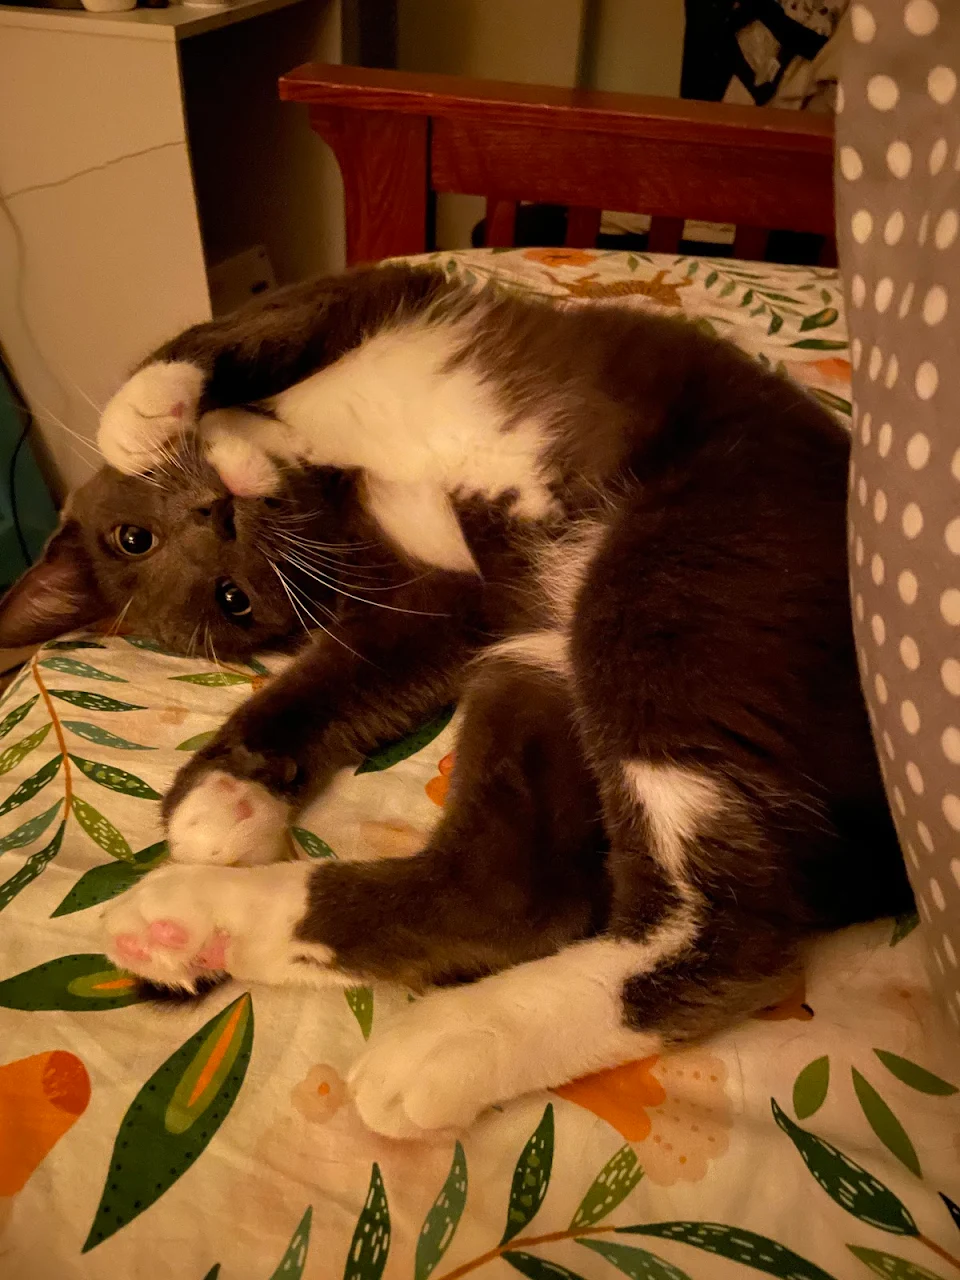 Bolero was adopted 4 days ago. I think he’s feeling pretty comfortable already